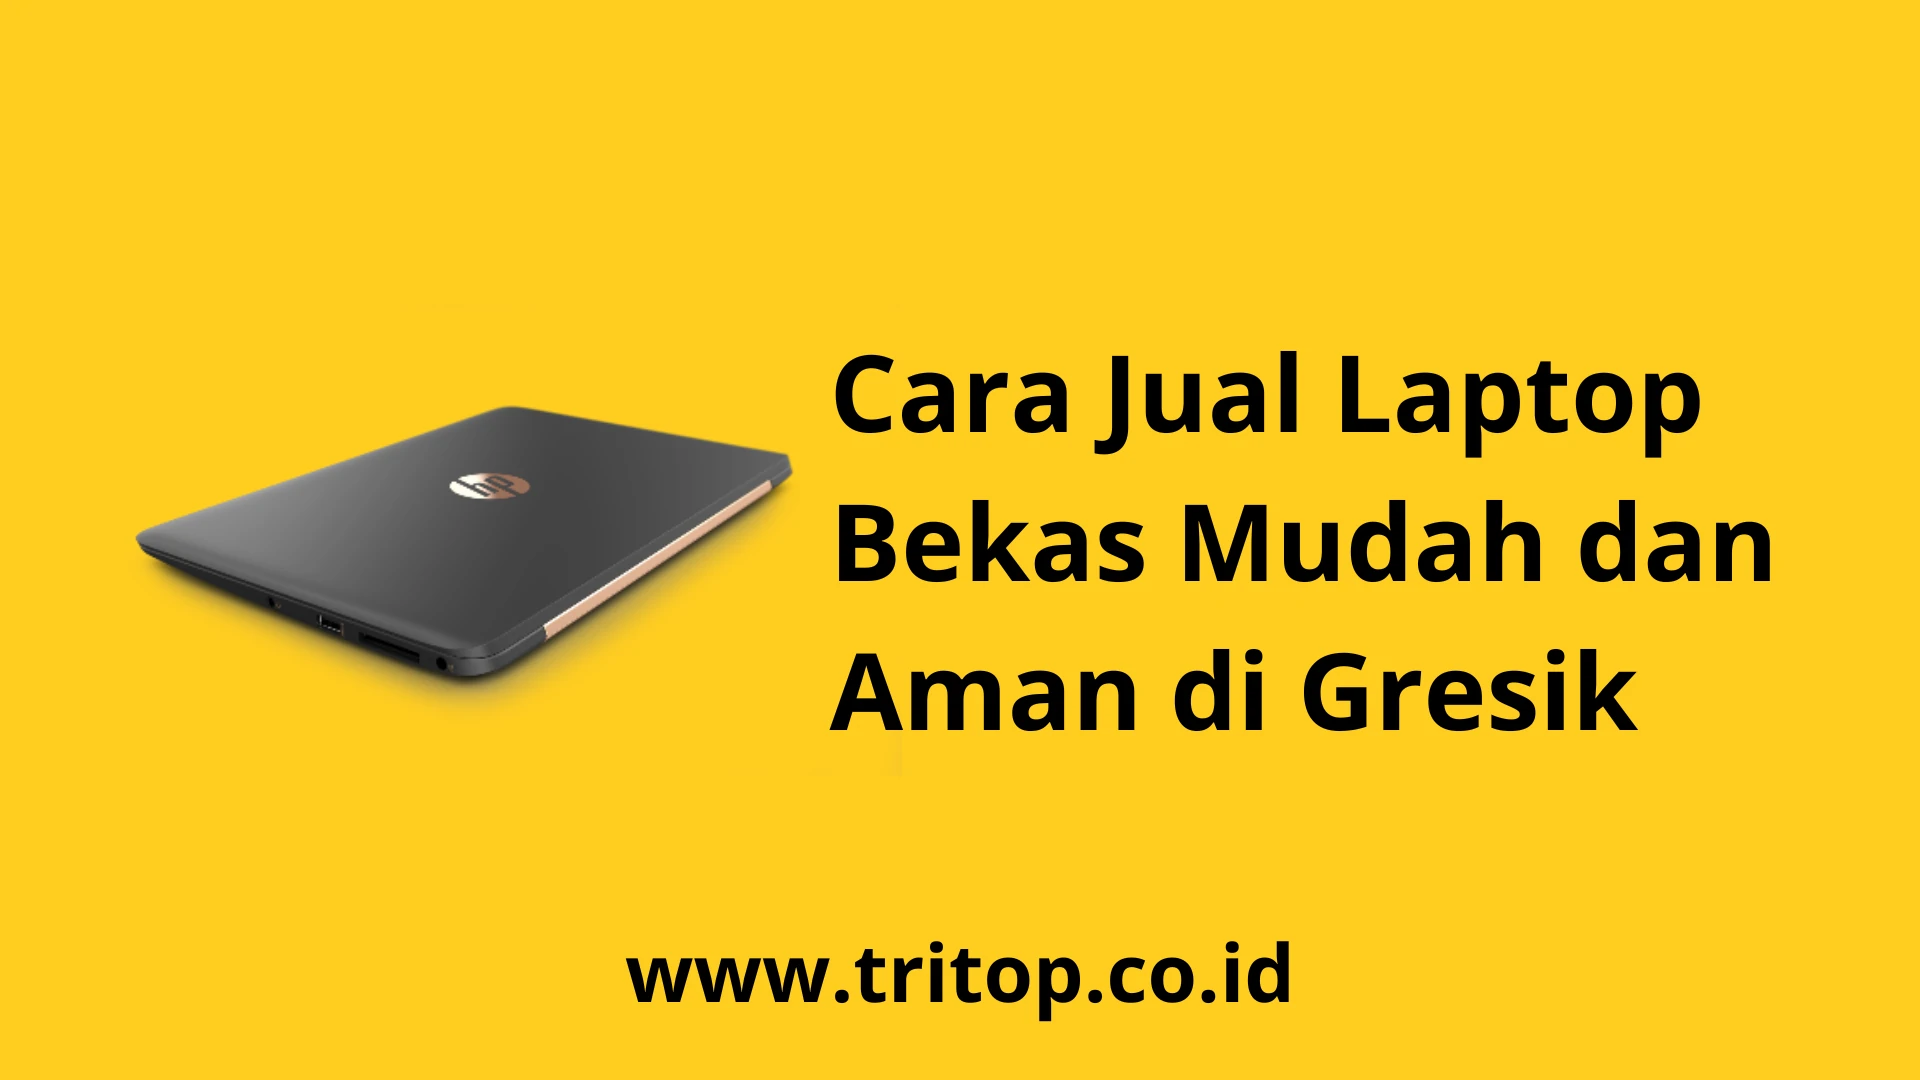 Jual Laptop Bekas Gresik www.tritop.co.id